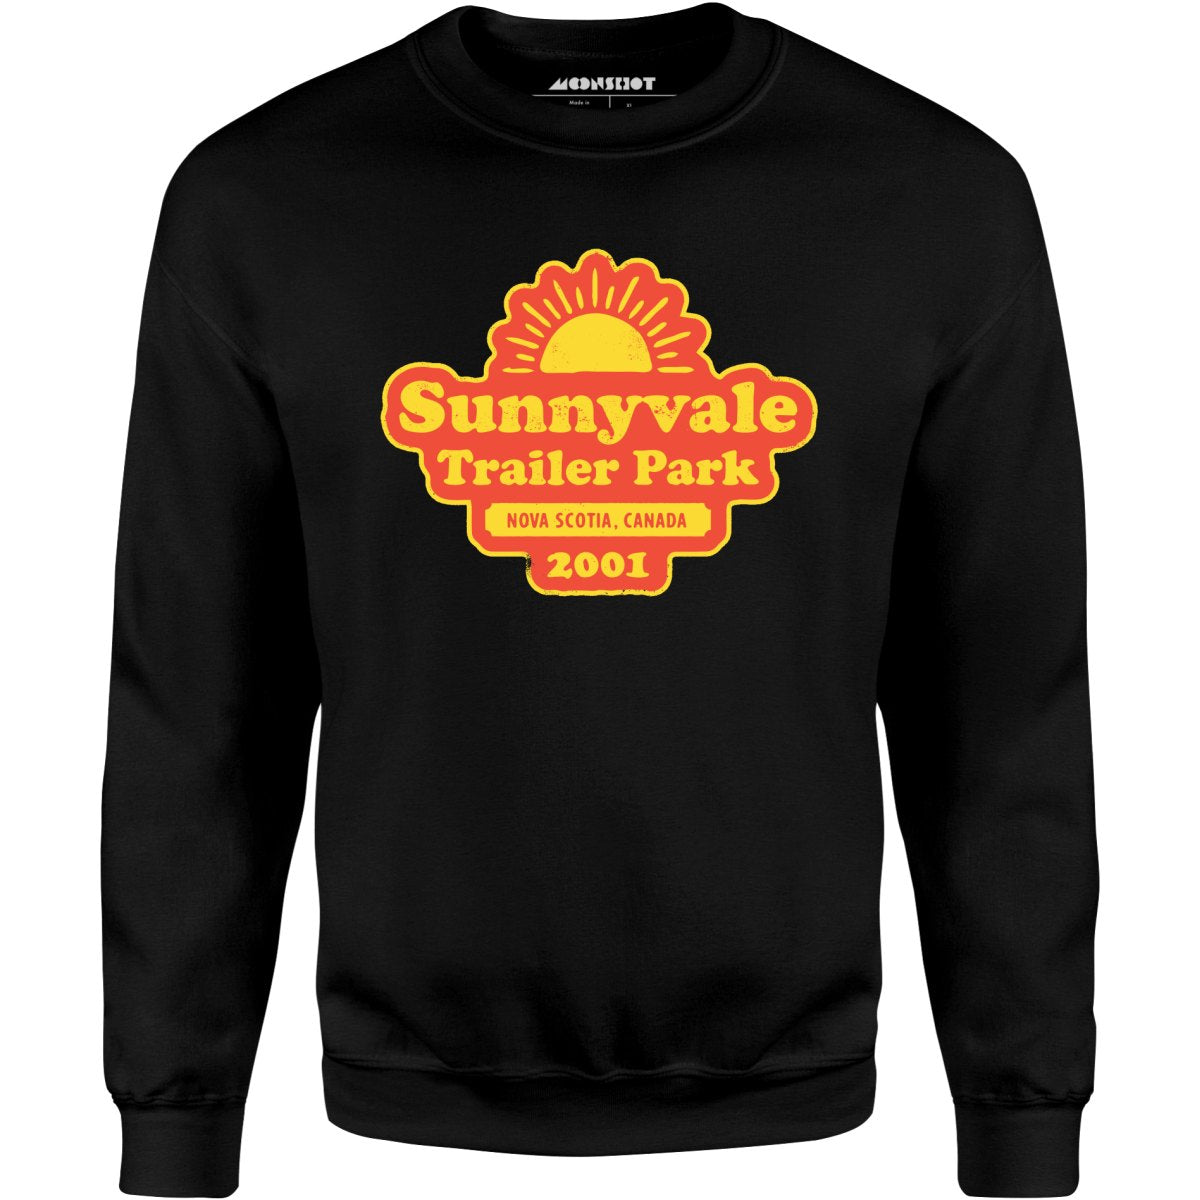 Sunnyvale Trailer Park - Unisex Sweatshirt